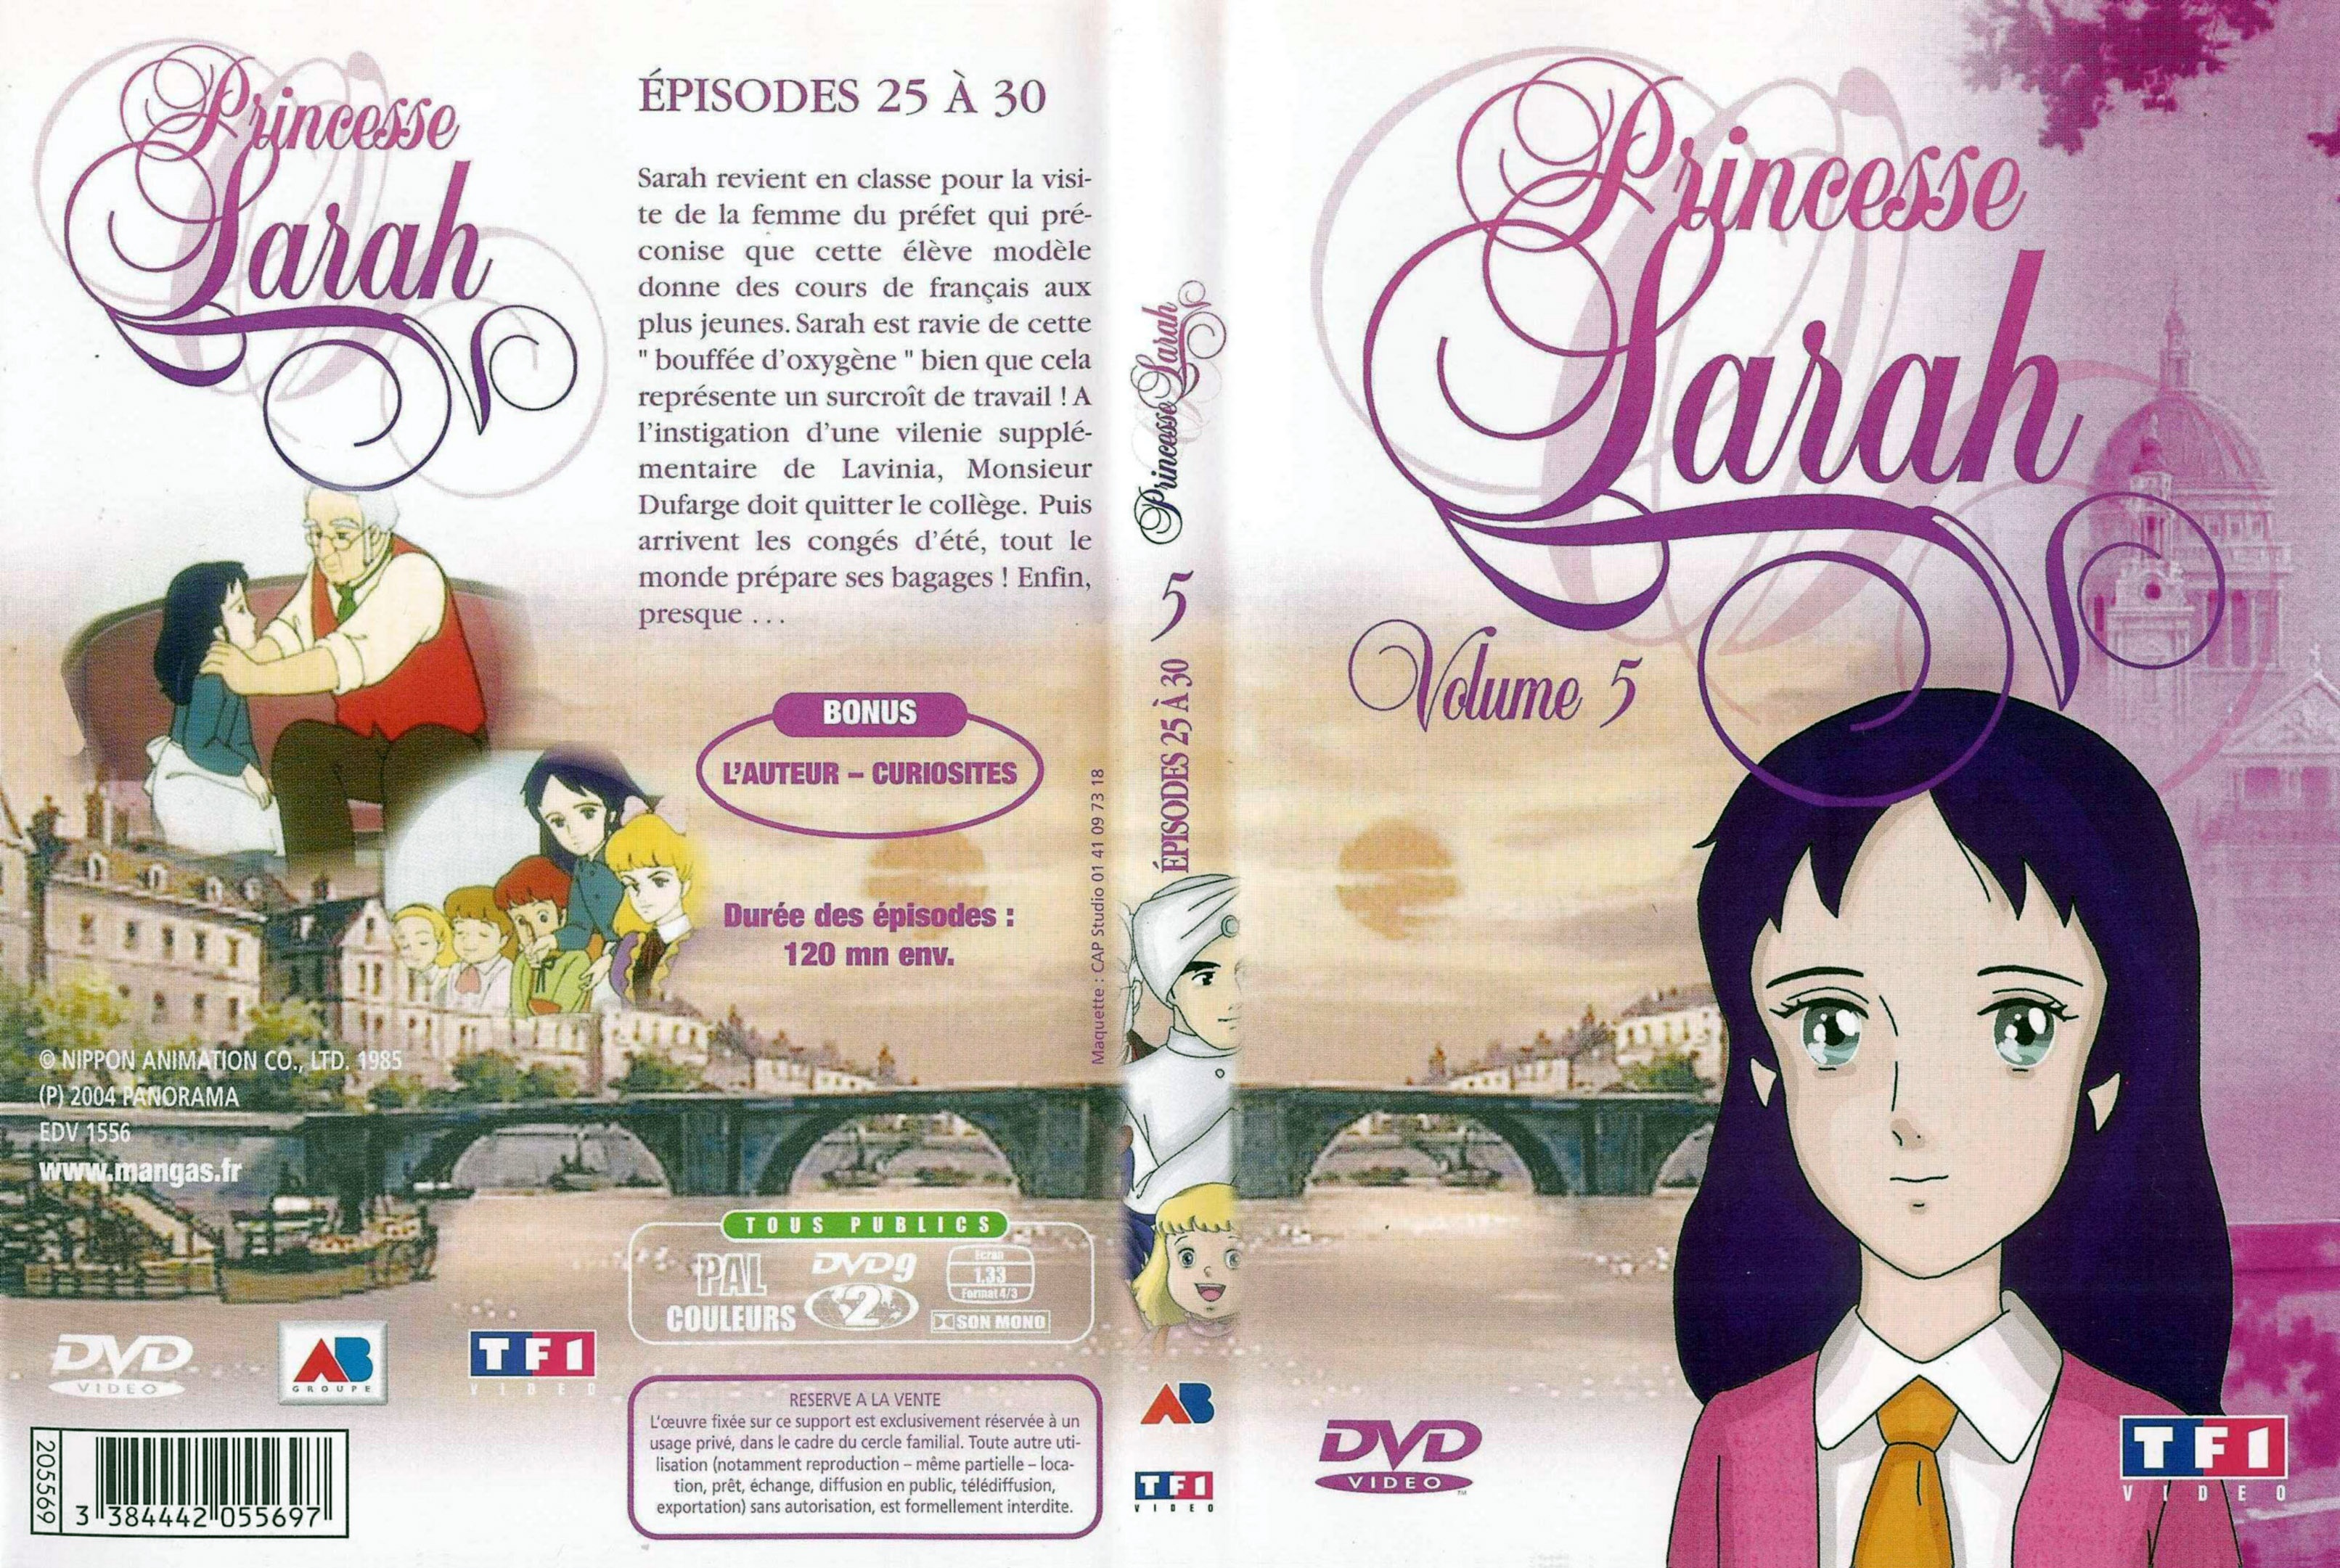 Jaquette DVD Princesse Sarah vol 5